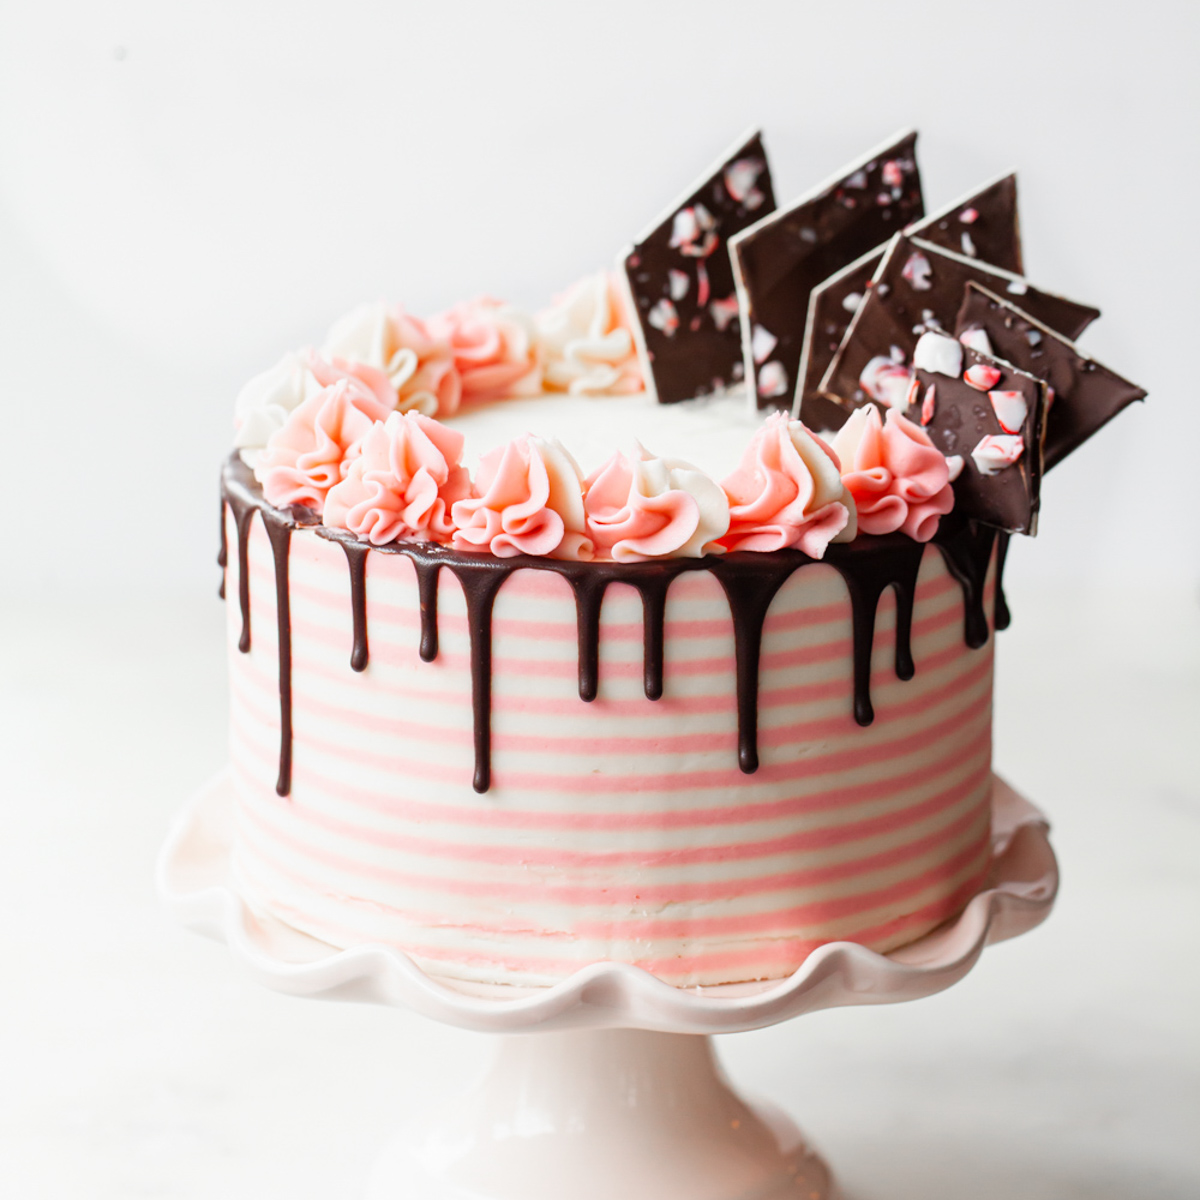 Candy Bar Stash Chocolate Cake – Modern Honey